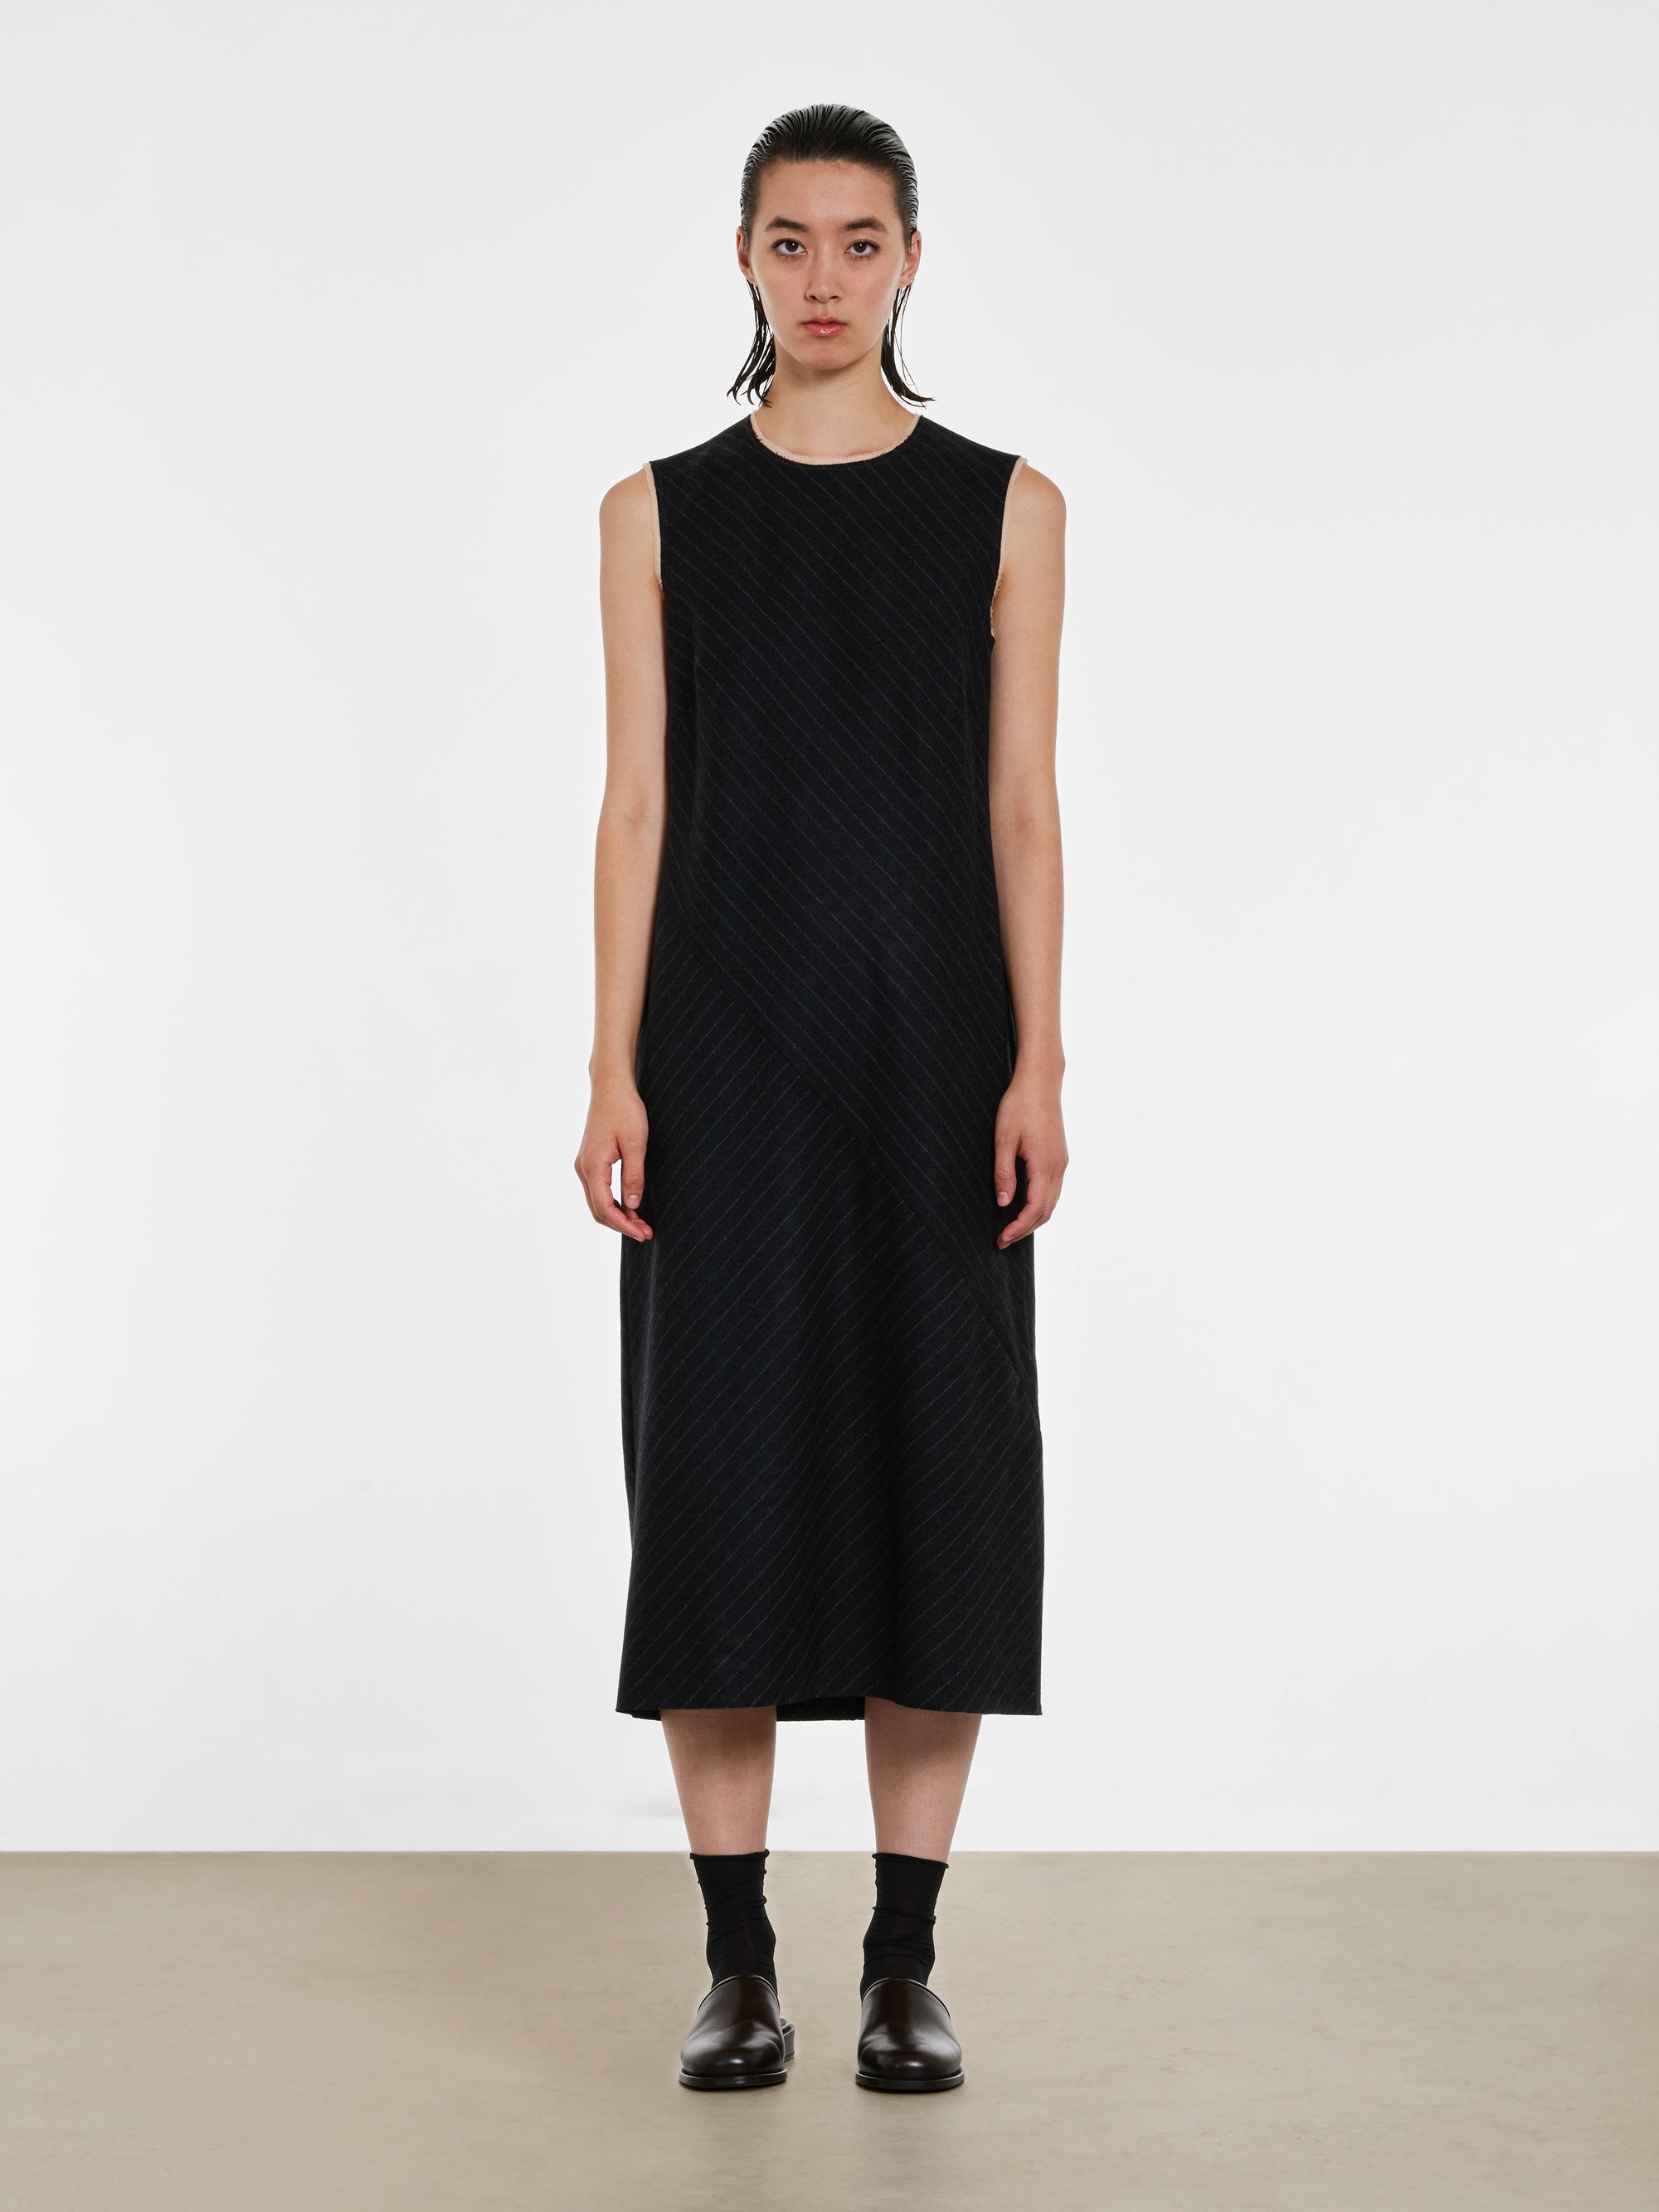 Dries Van Noten - Women’s Pinstripe Dress - (Anthracite) view 1